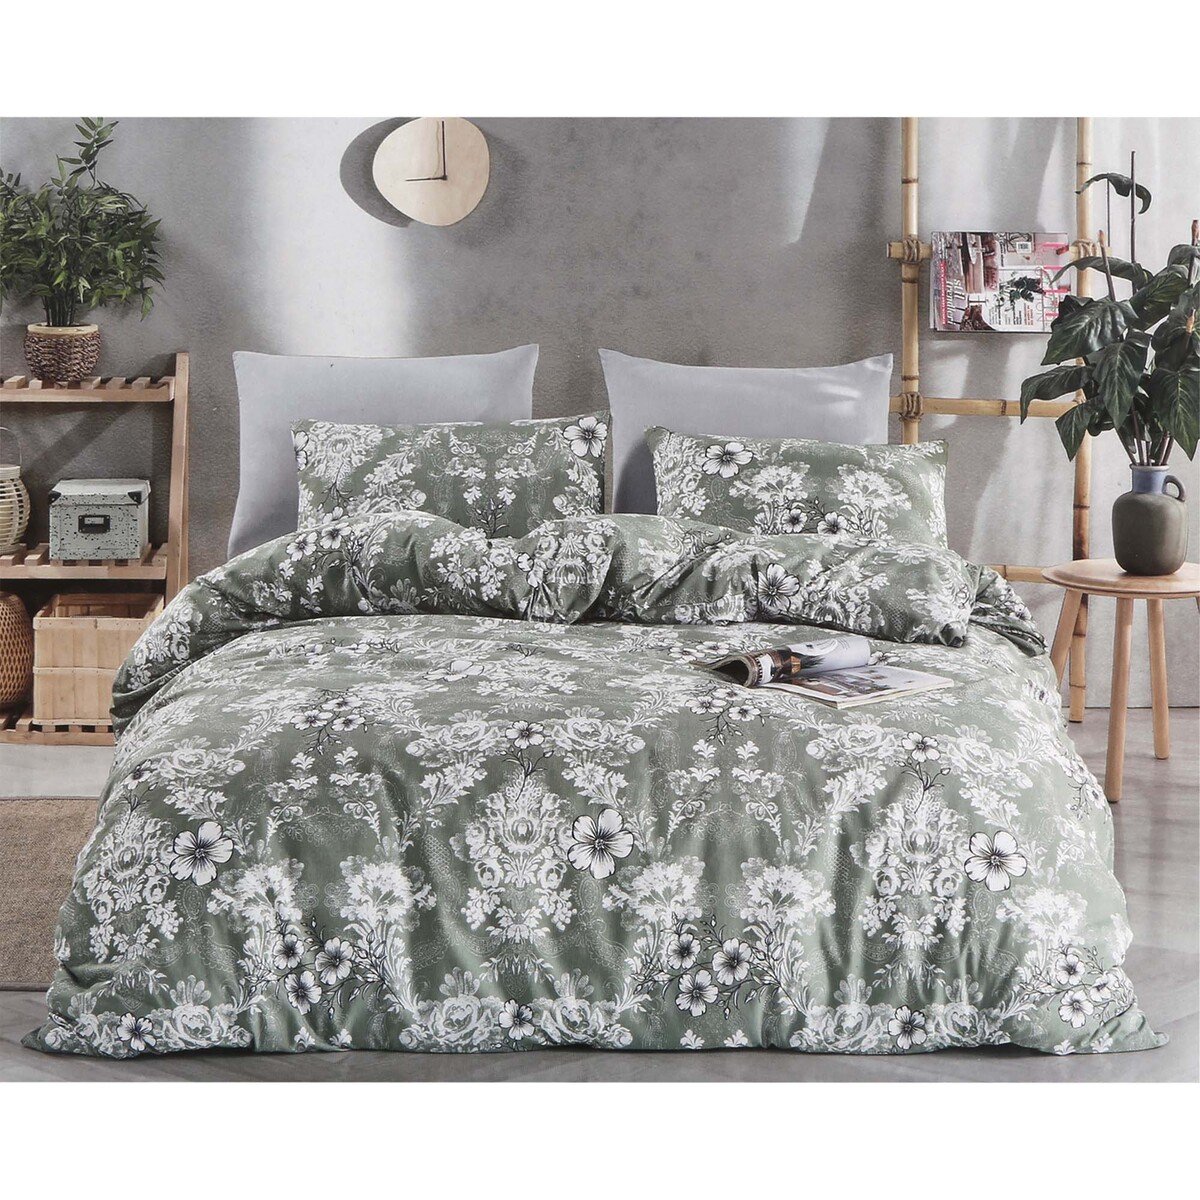 Cortigiani Bedspread 160x230cm Assorted Online At Best Price Bed Spreads Lulu Kuwait 5027